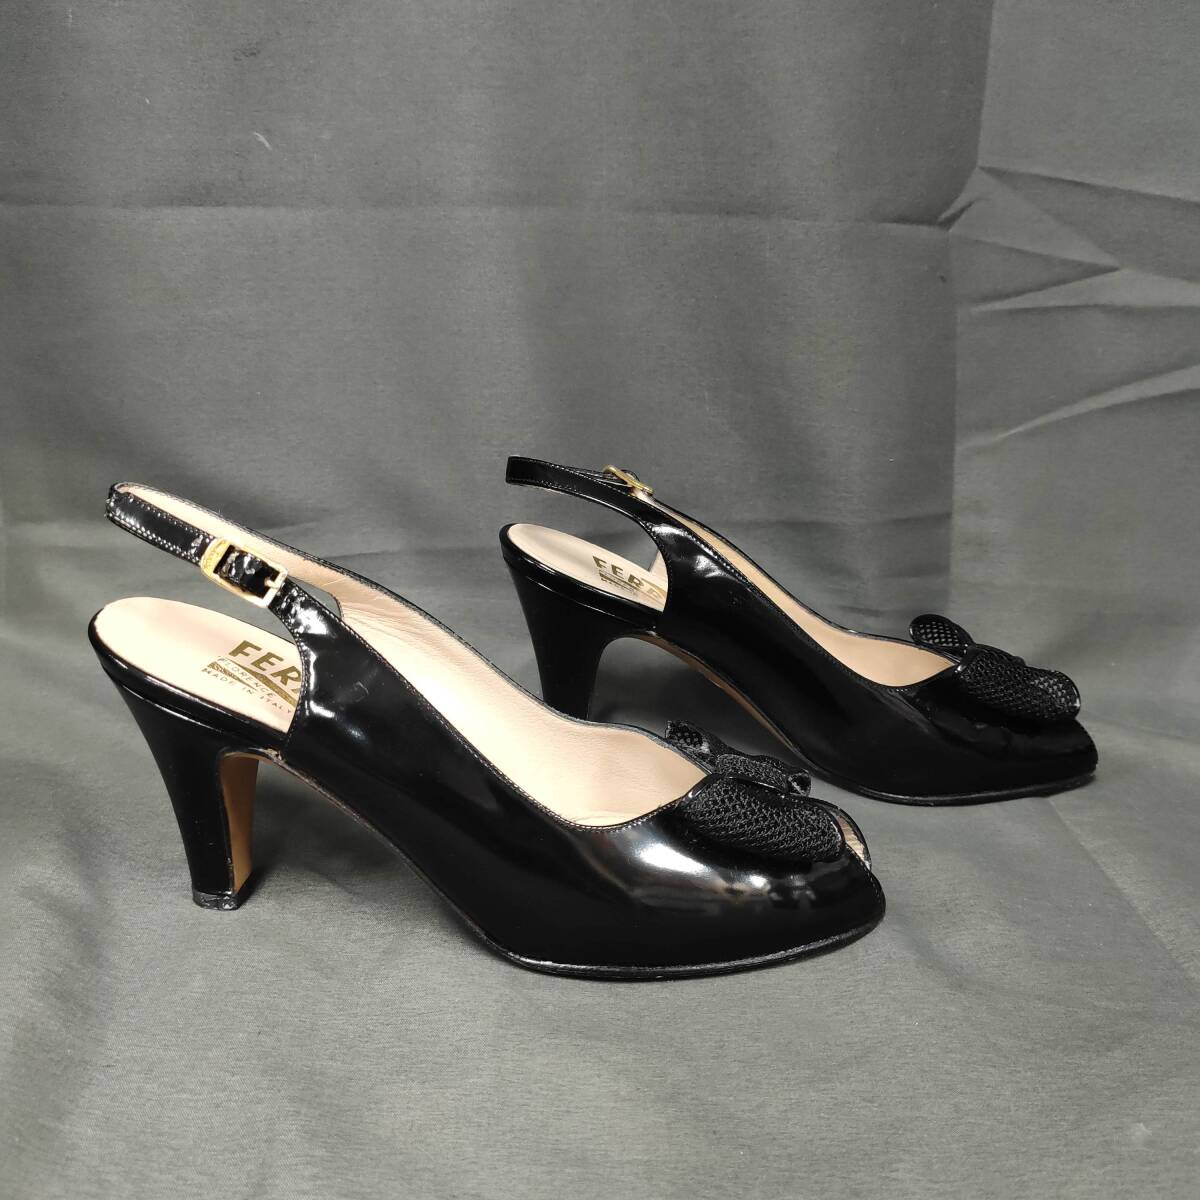 060307 260095-1 SalvatoreFerragamo Ferragamo pumps heel black lady's size :4 shoes shoes box attaching USED goods 